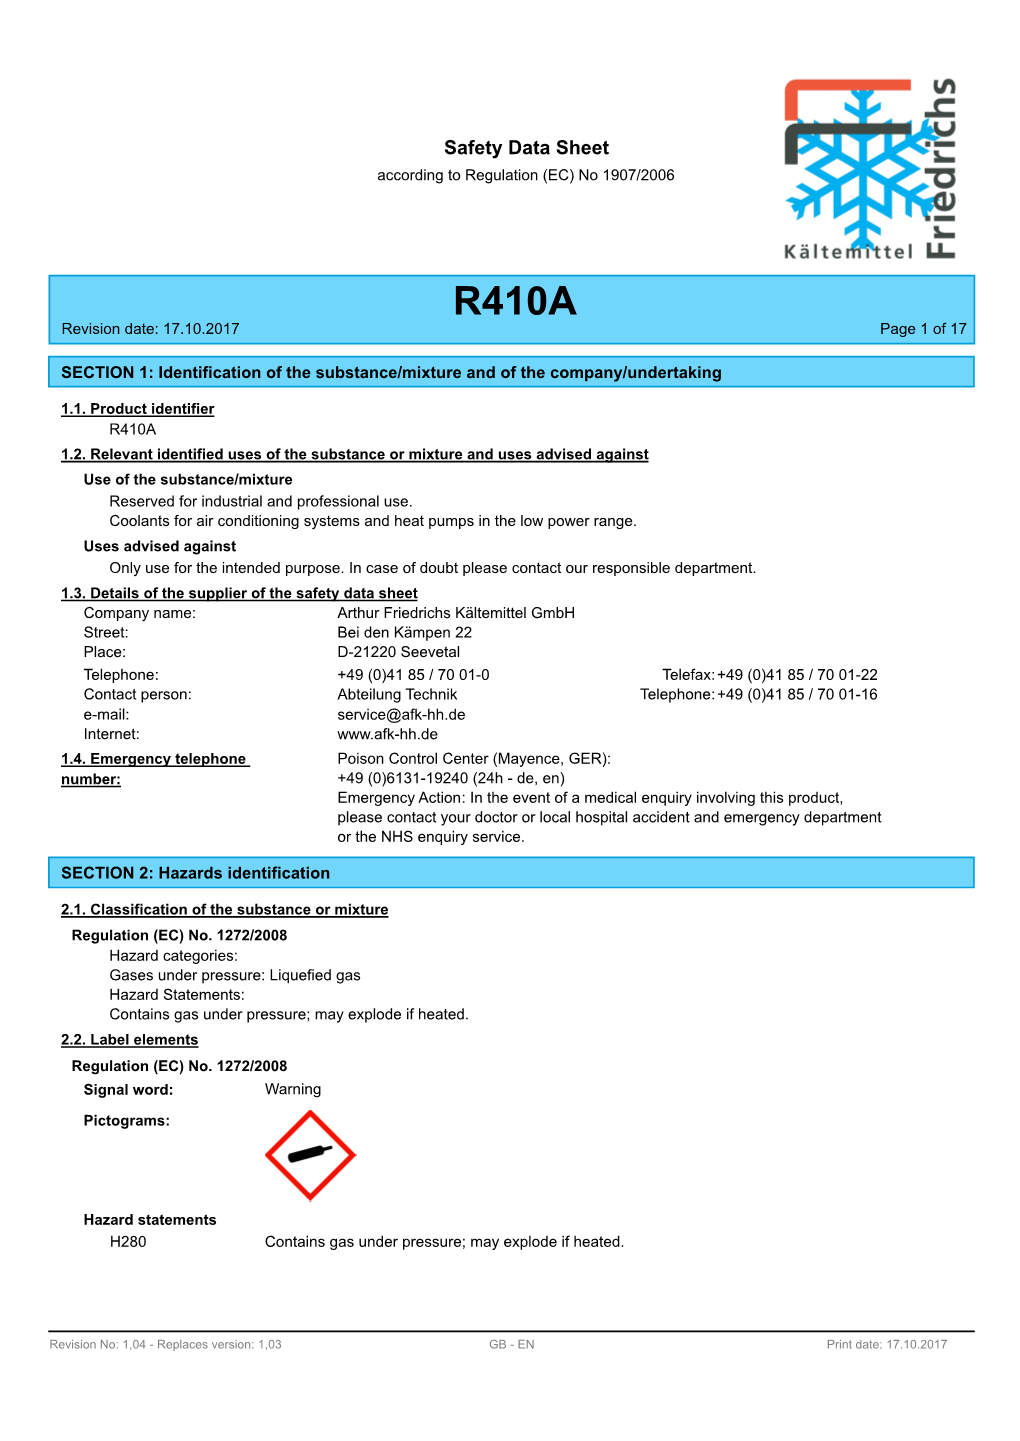 Safety Data Sheet According to Regulation (EC) No 1907/2006